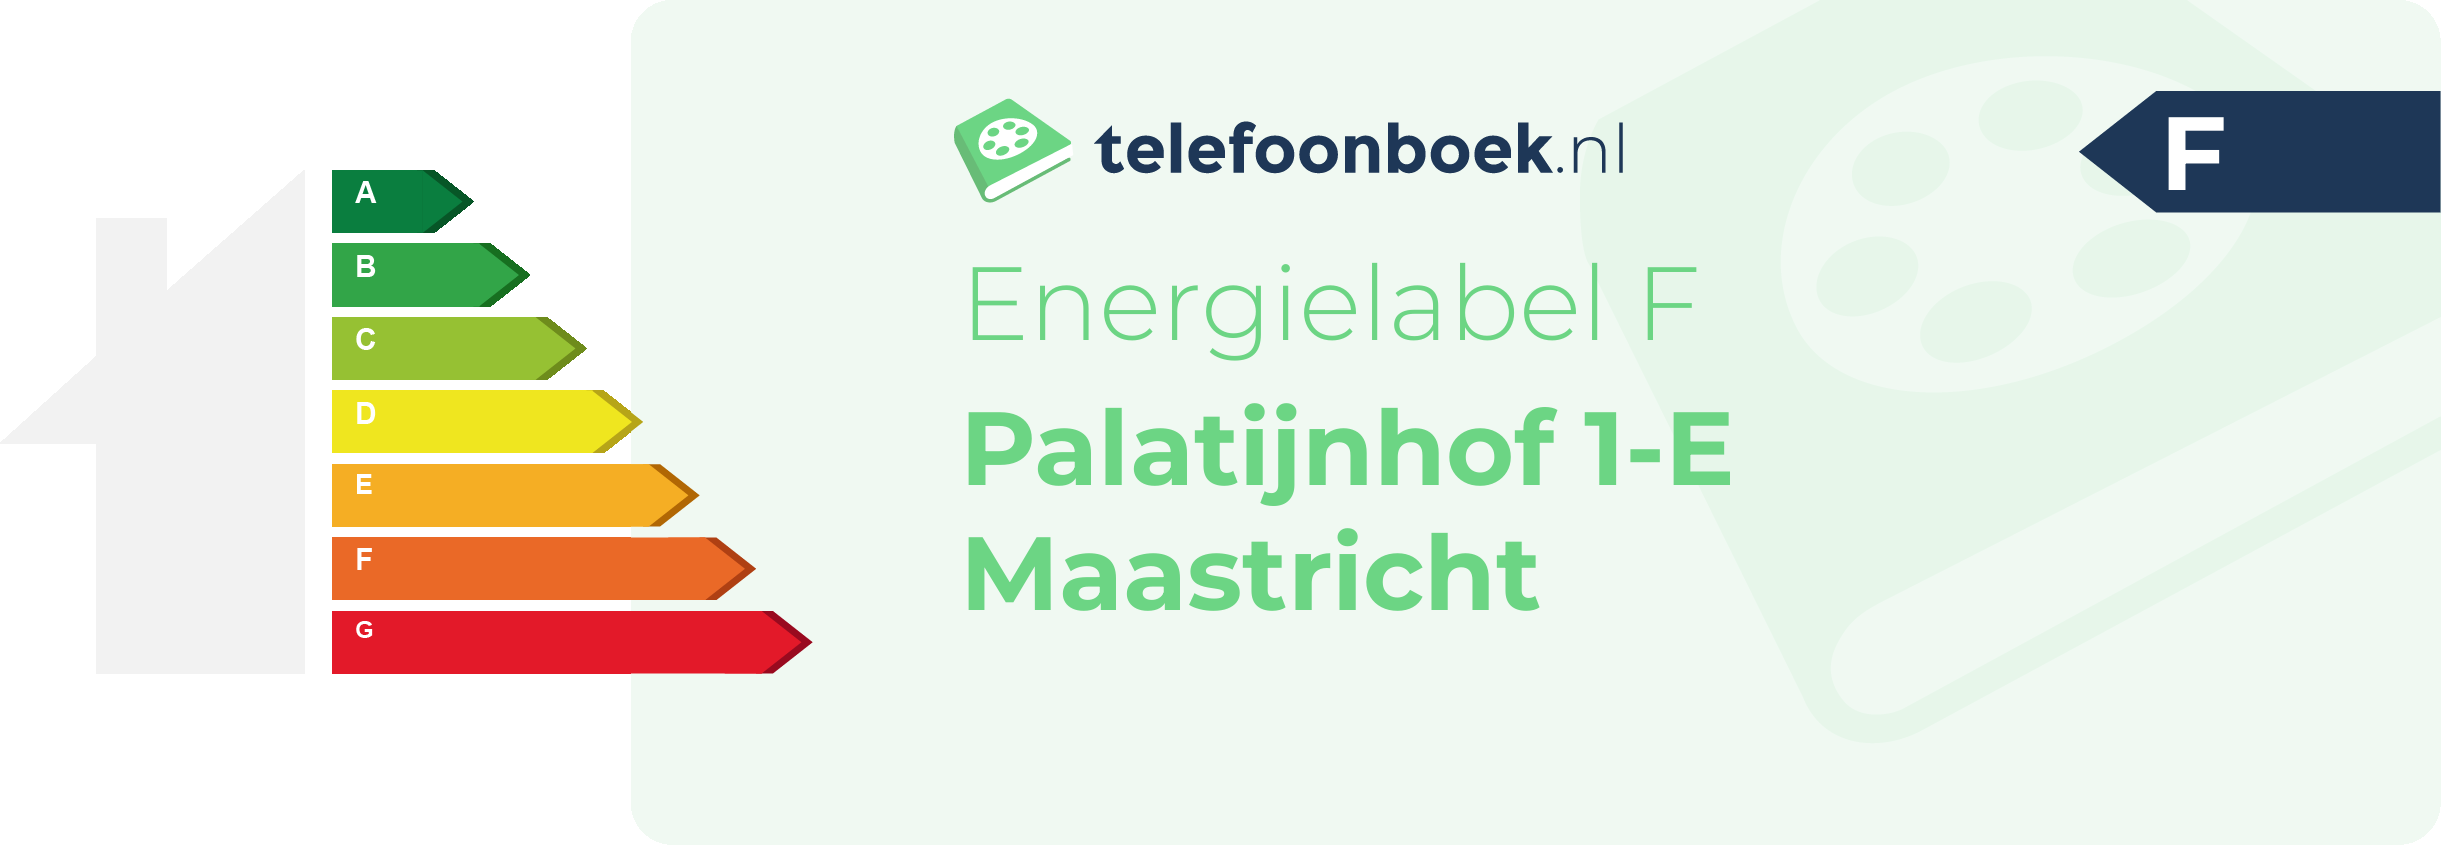 Energielabel Palatijnhof 1-E Maastricht